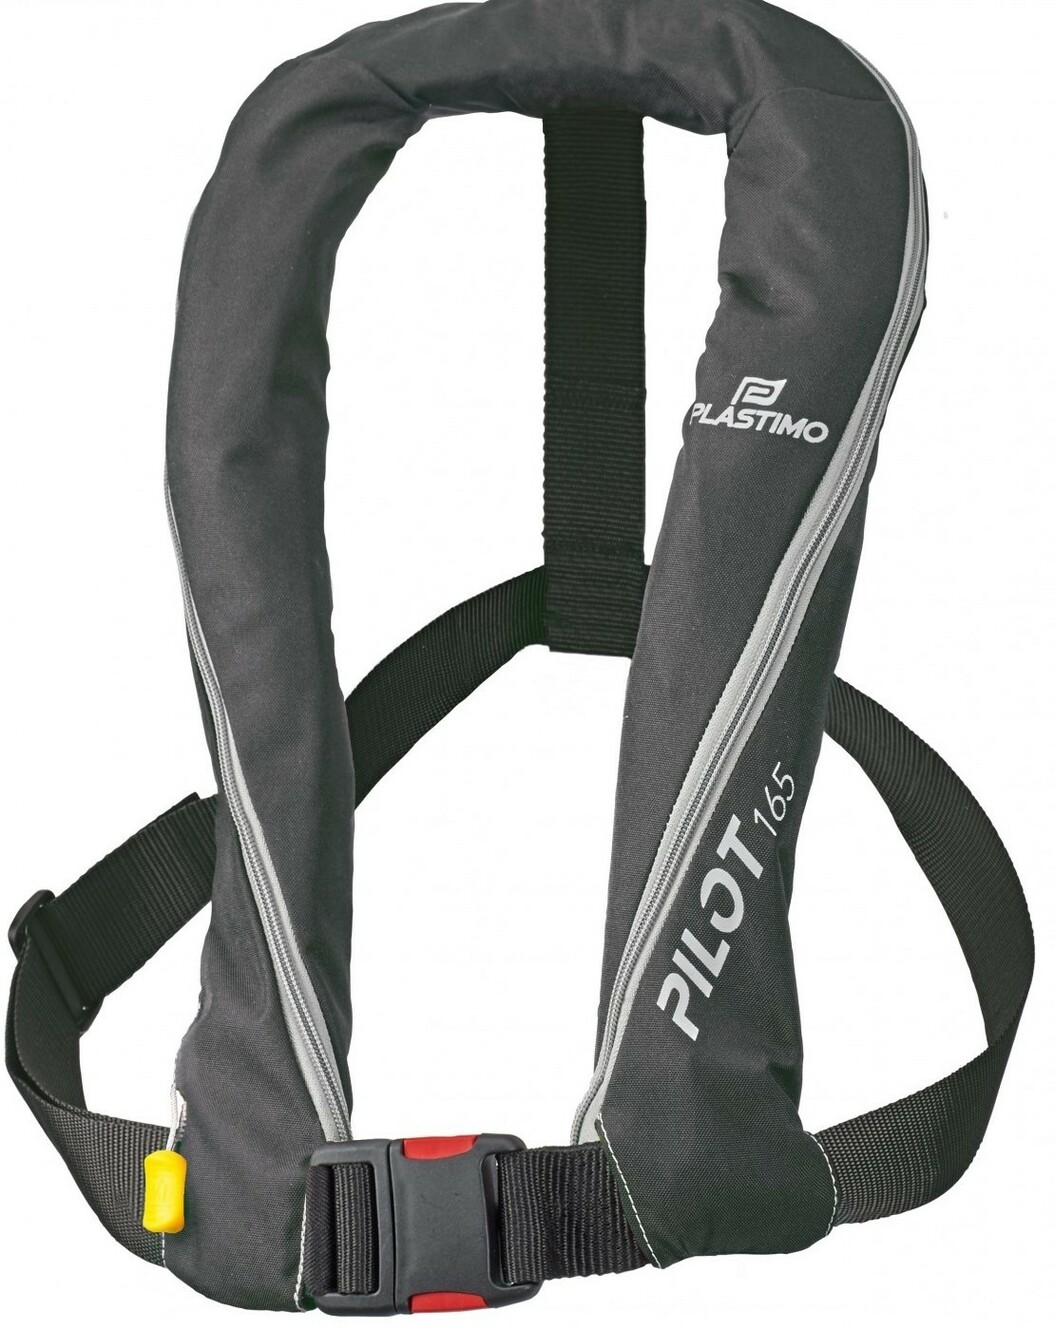 Lifejacket Pilot 165 Manual Black Zip Harness Rated Buoyancy 150 N<Br>Actual Buoyancy 165 N